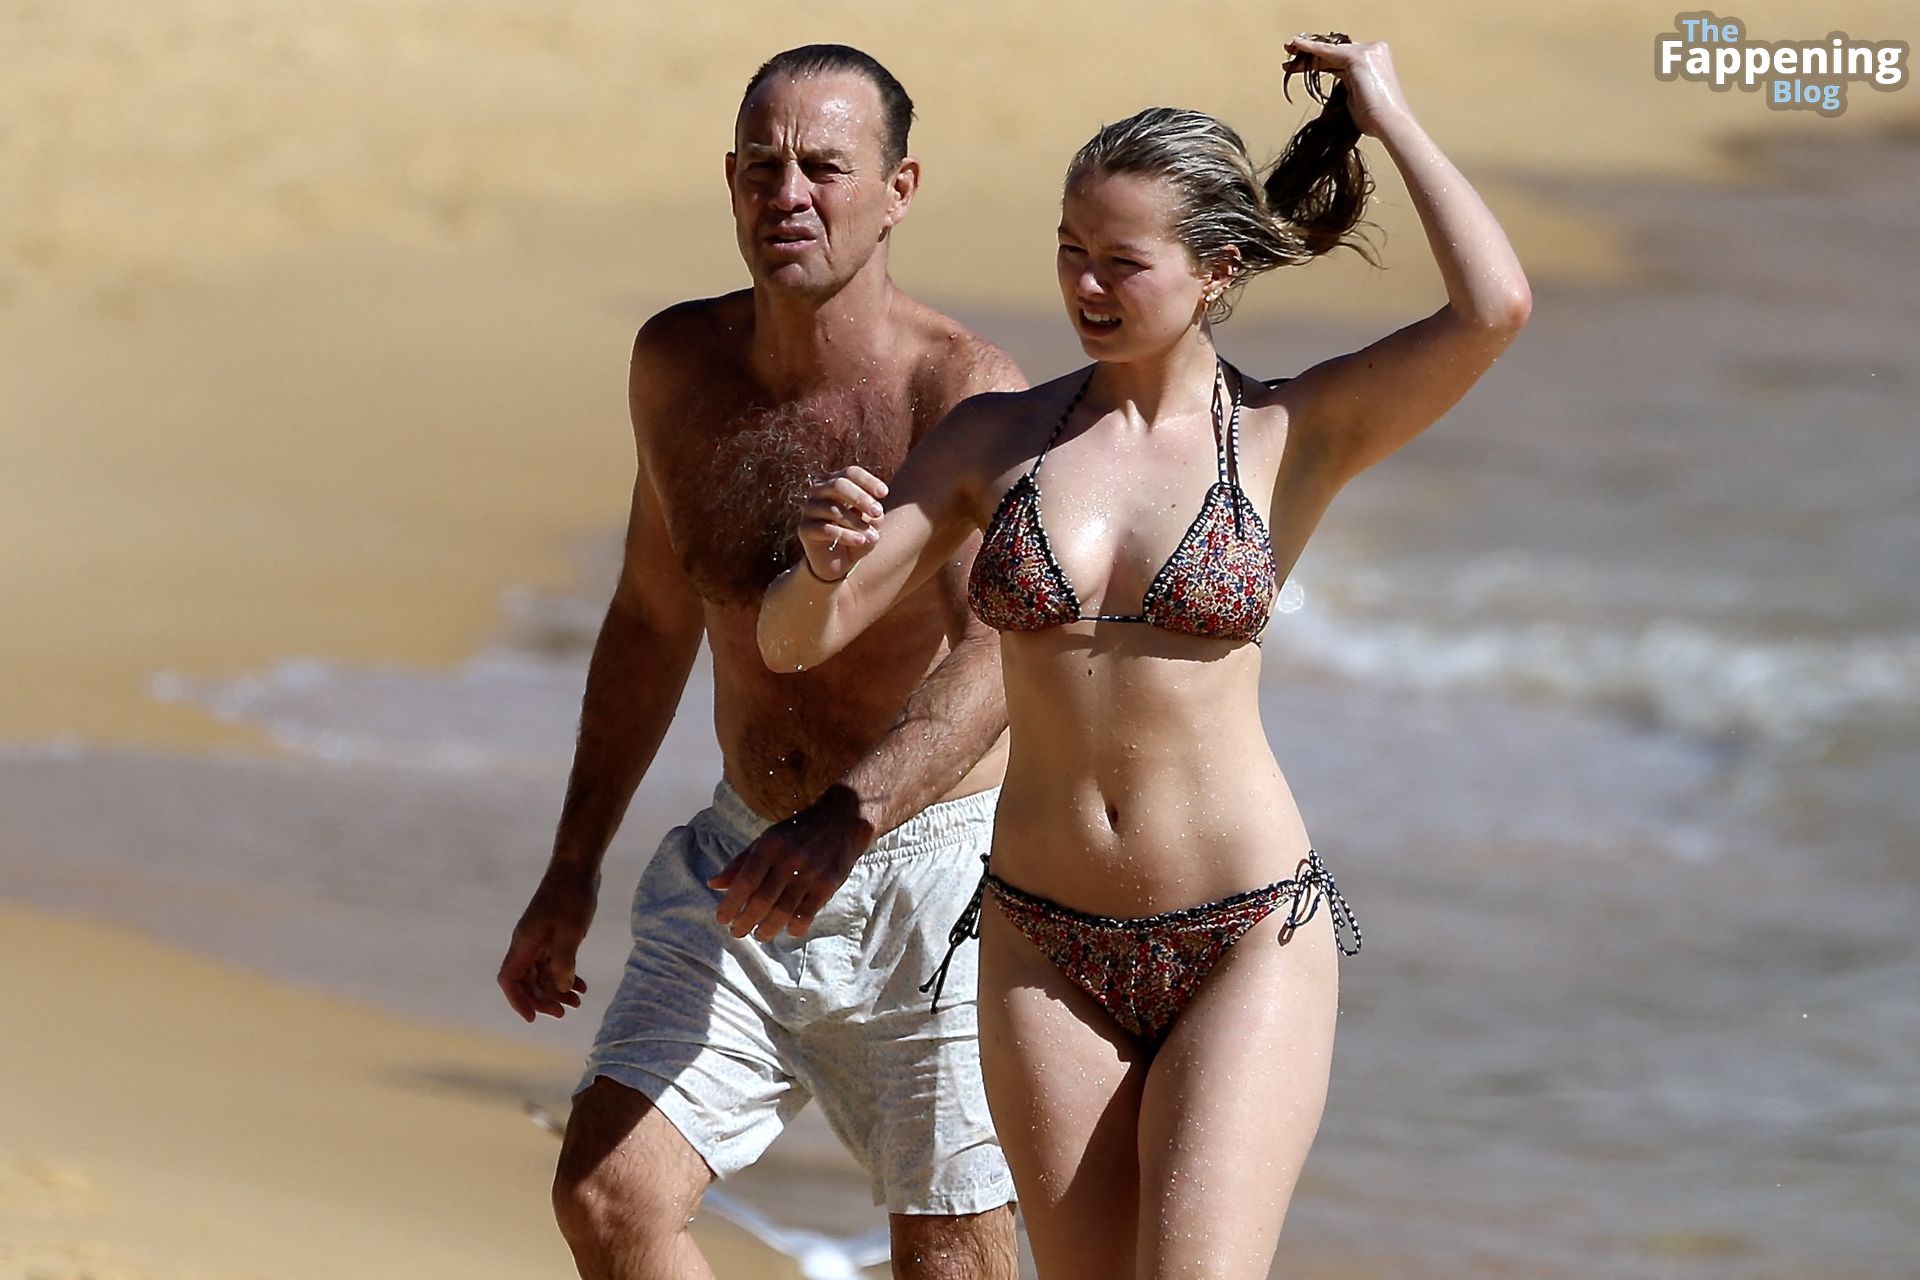 Jemma Donovan Shows Off Her Sexy Bikini Body at Camp Cove Beach in Sydney (40 Photos)